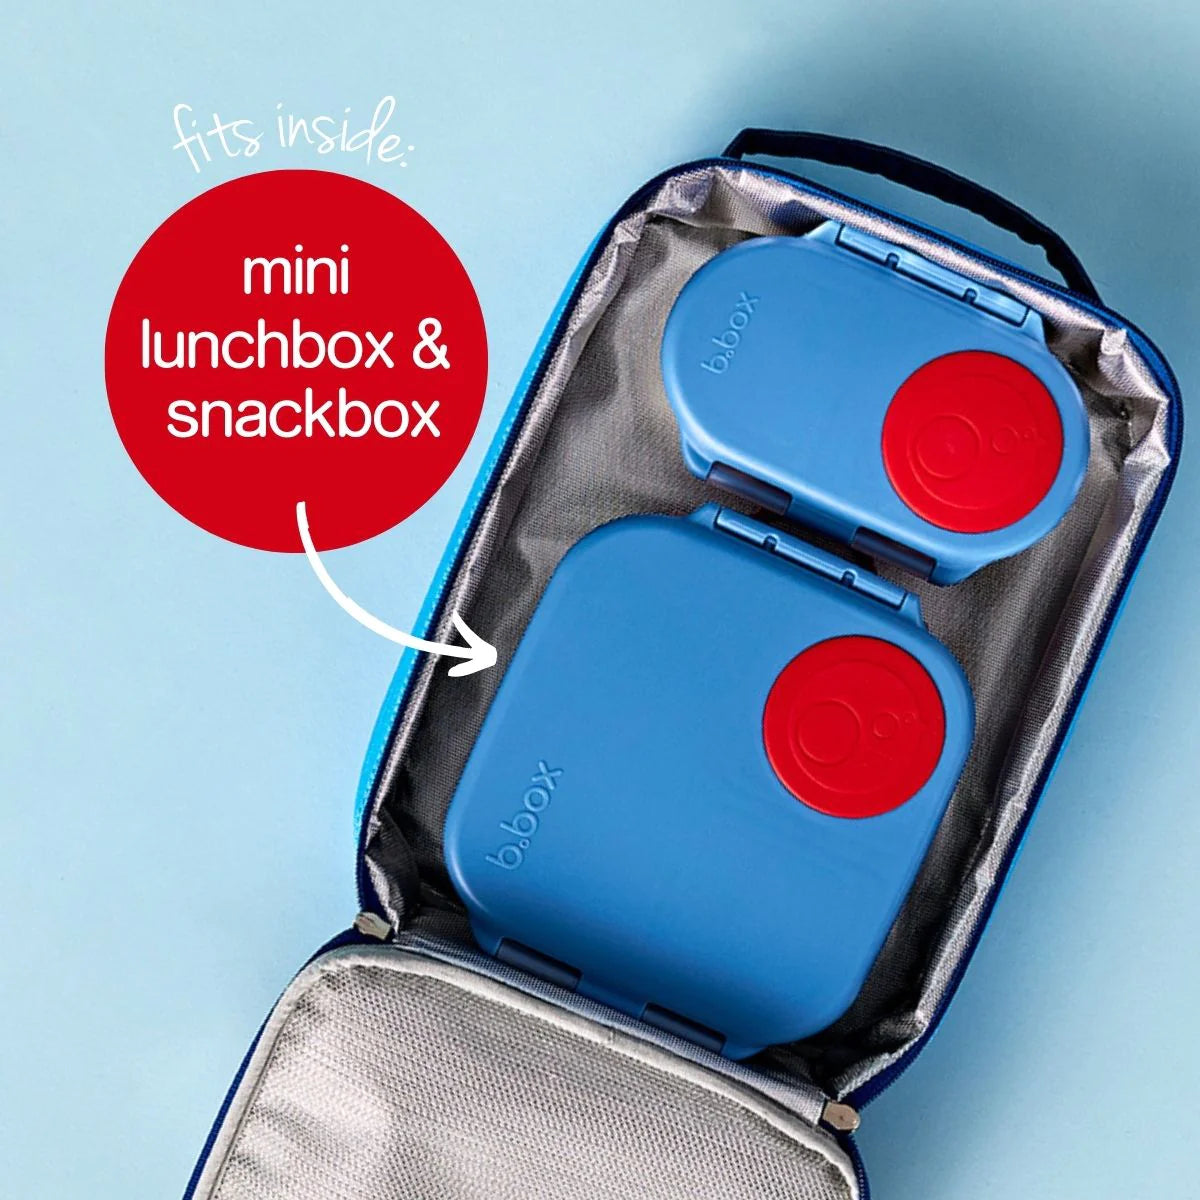 B.Box Flexi Insulated Lunch Bag